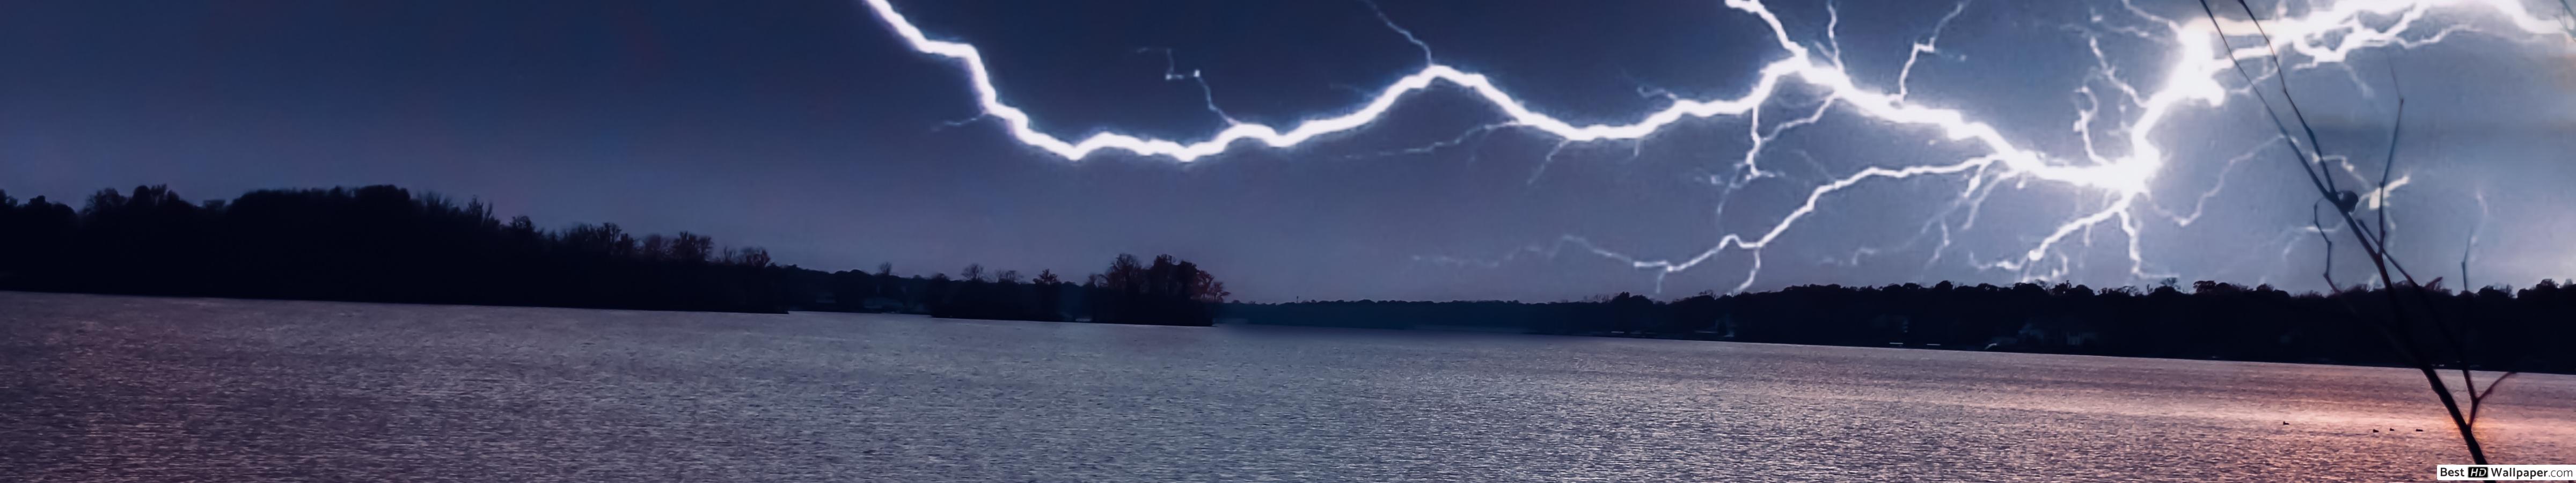 Lightning At The Lake HD Wallpaper